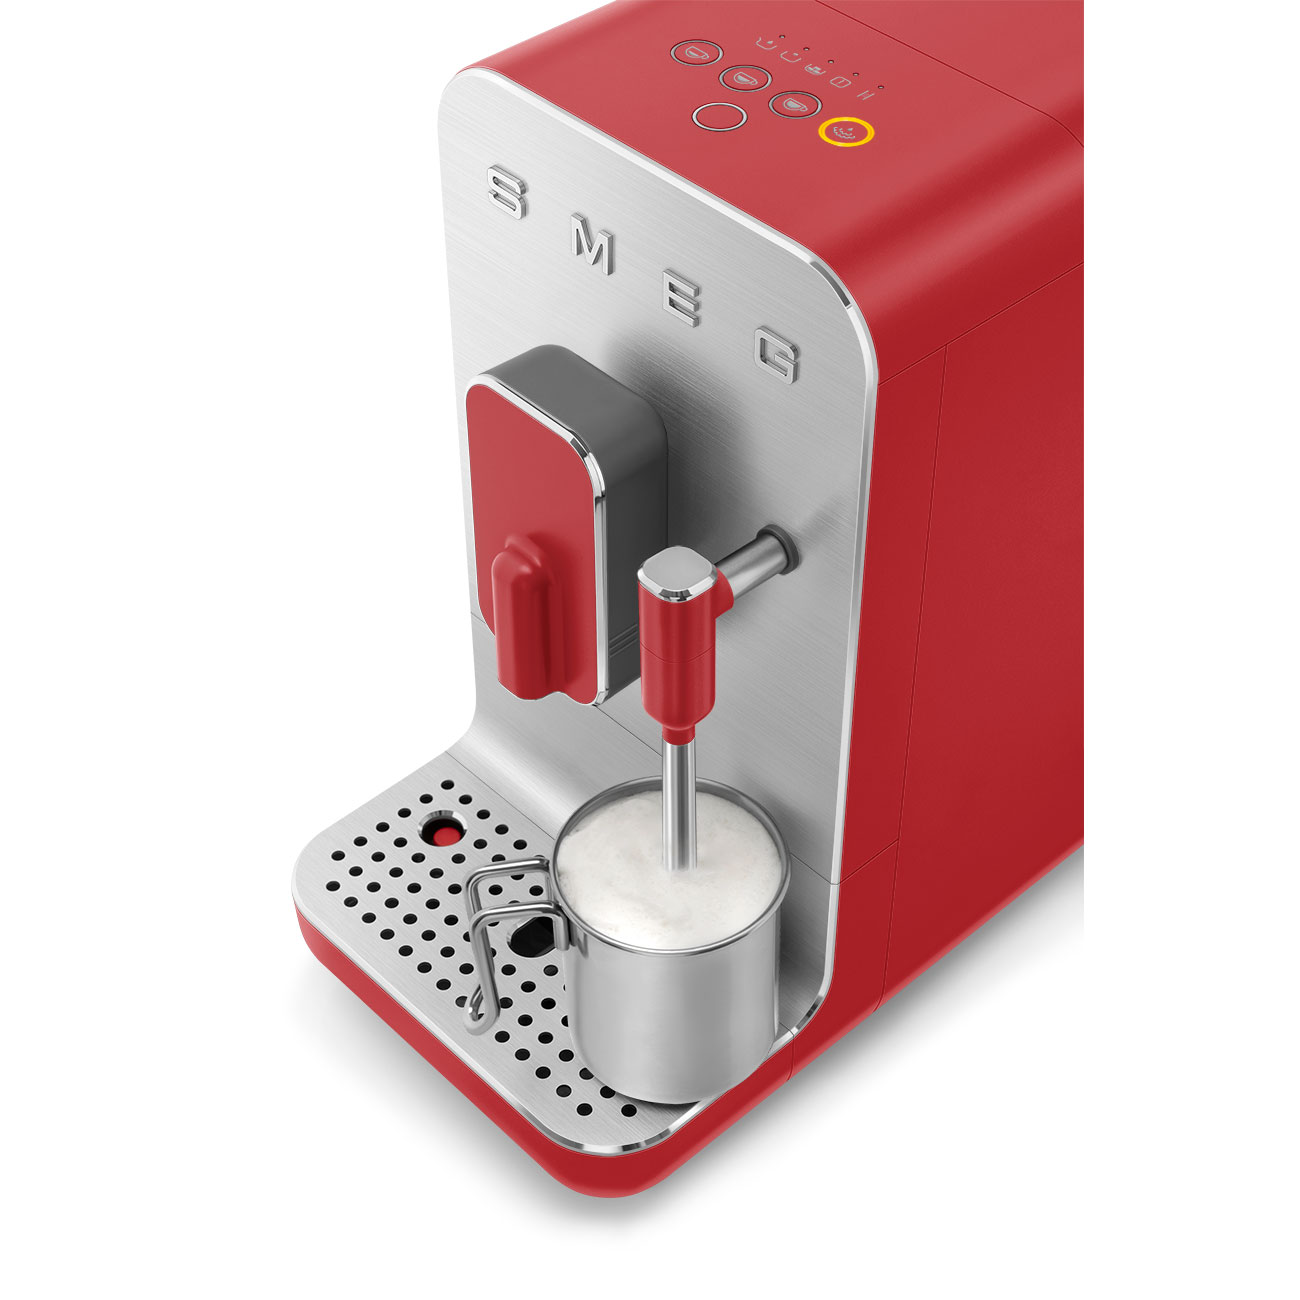 Smeg Kaffeevollautomat BCC02 mit Milchlanze matt rot